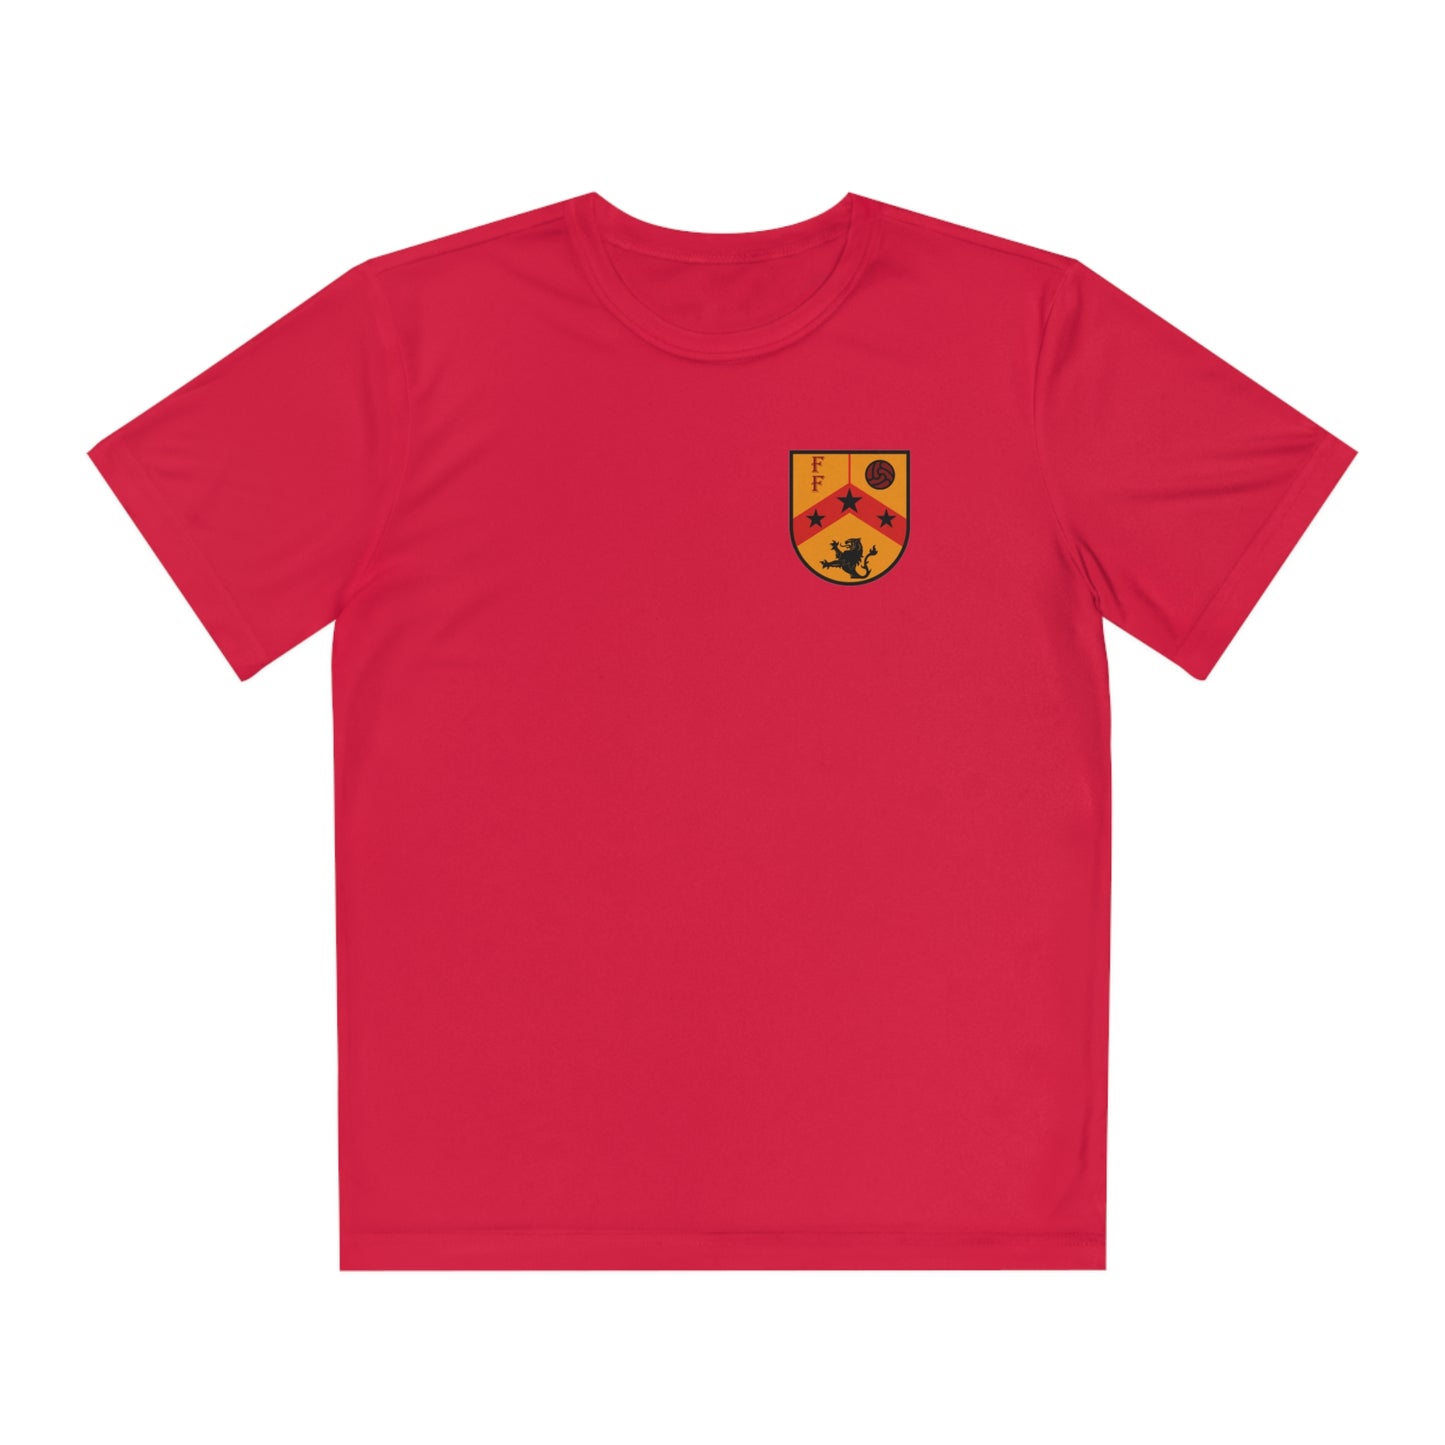 FEAR FIERCE LIONS Youth Athletic T-Shirt (Unisex)